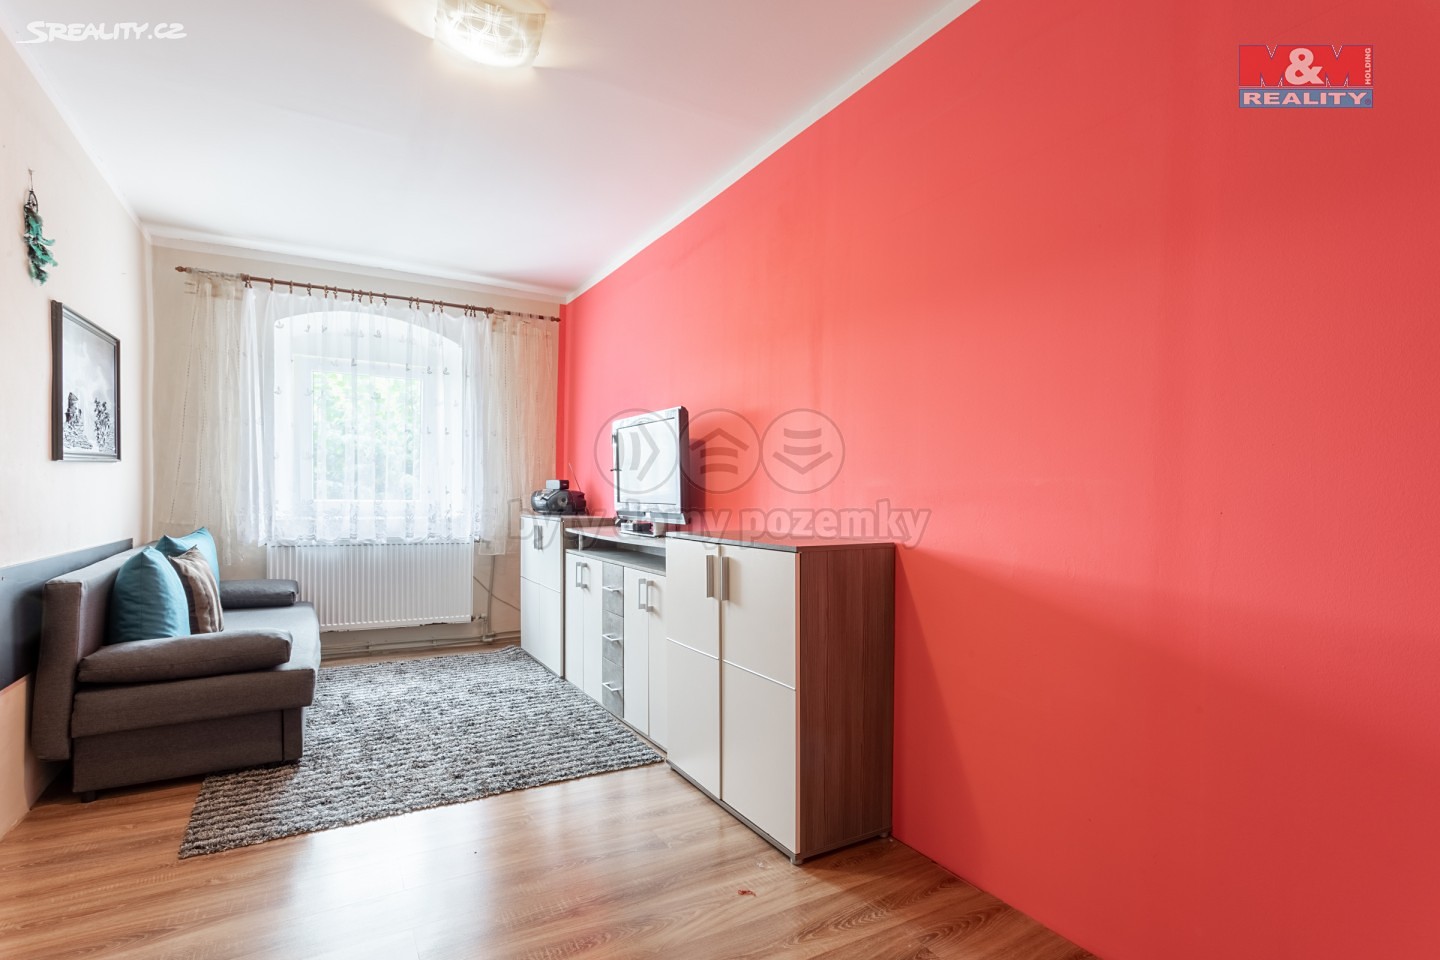 Prodej  rodinného domu 130 m², pozemek 3 384 m², Stružná - Nová Víska, okres Karlovy Vary